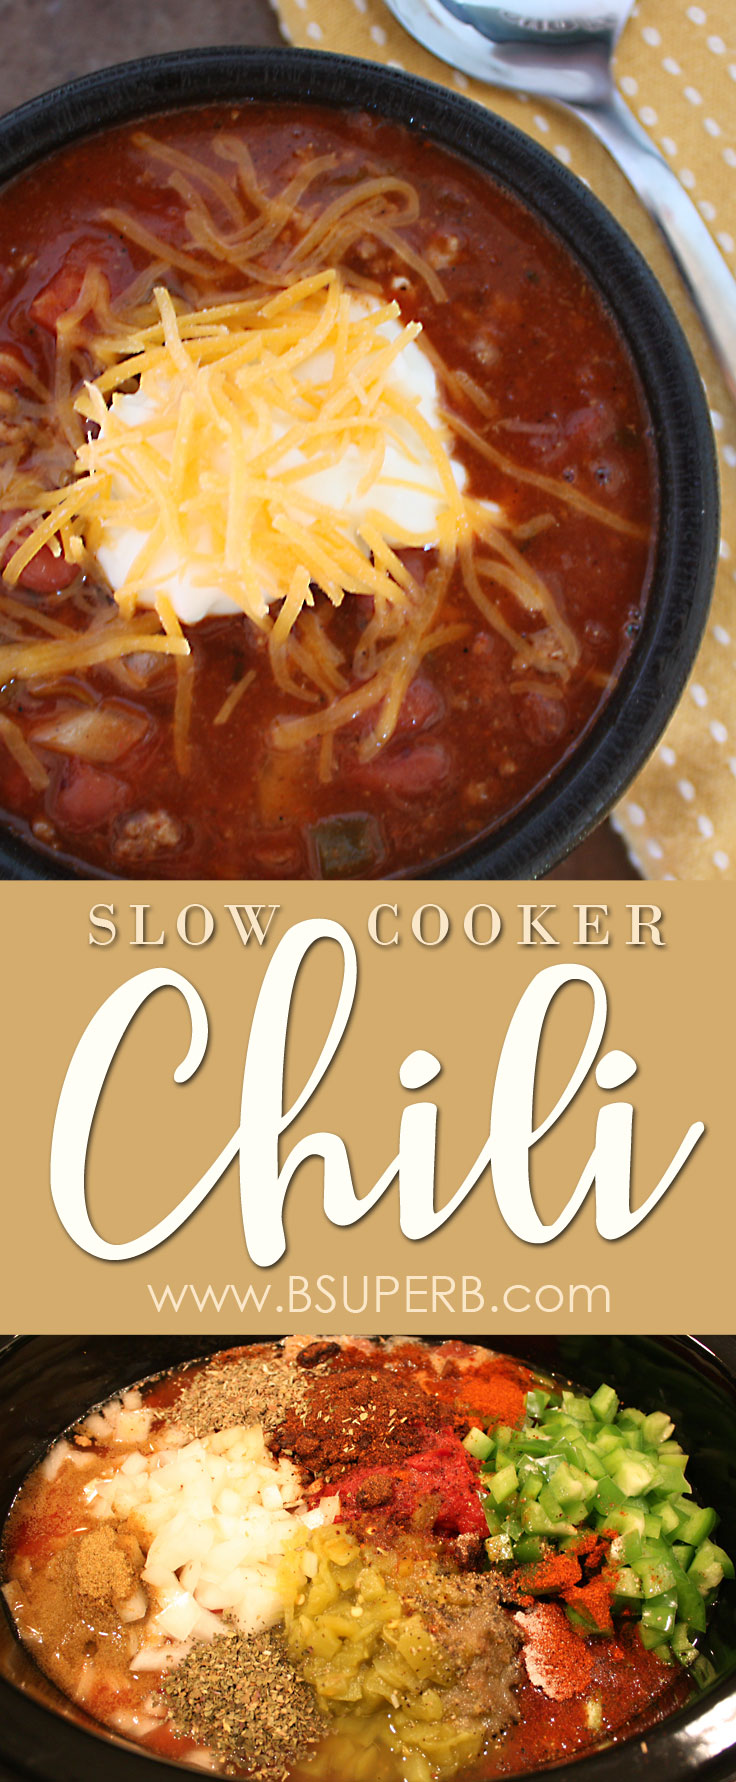 Slow Cooker Chili - amazing flavor